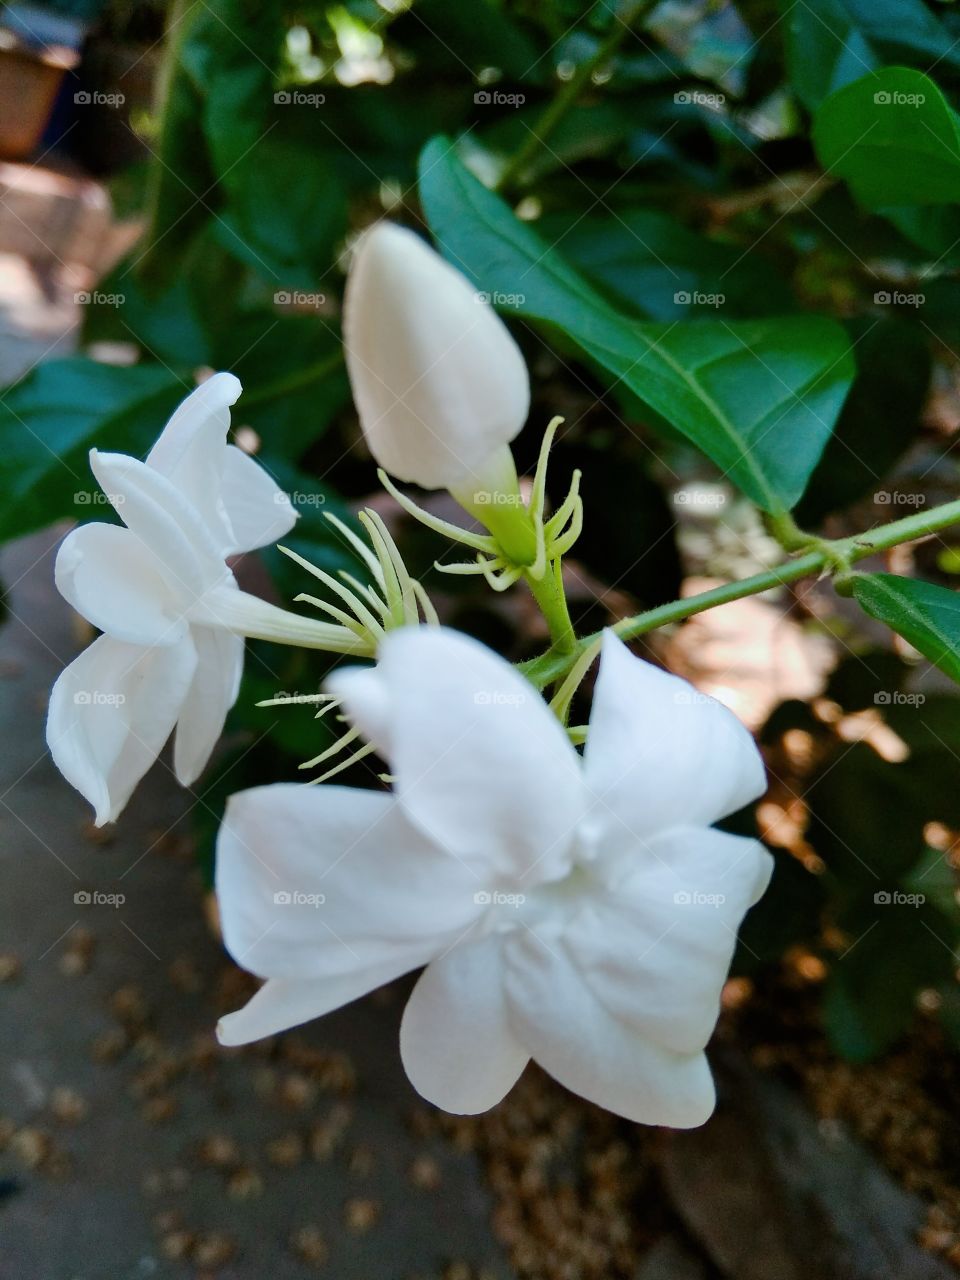 The beauty of jasmine flowers